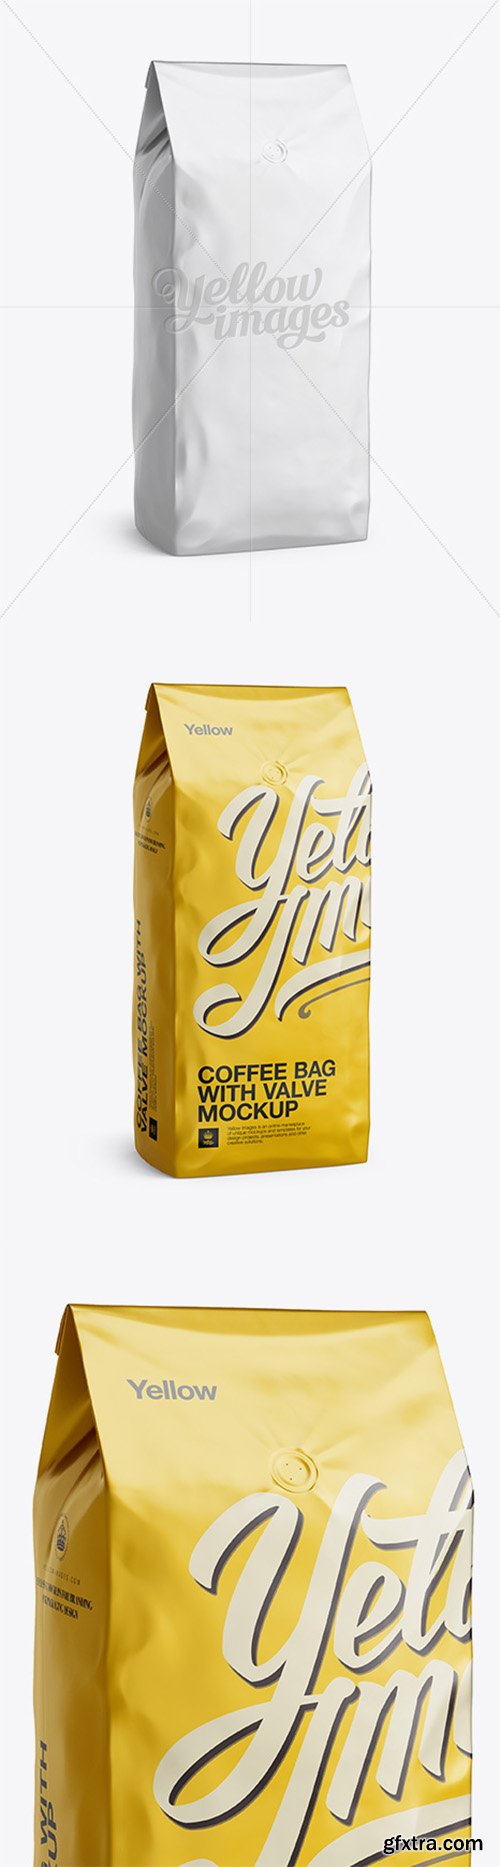 2,5 kg Matte Metallic Coffee Bag With Valve Mockup - Half-Turned View 12210